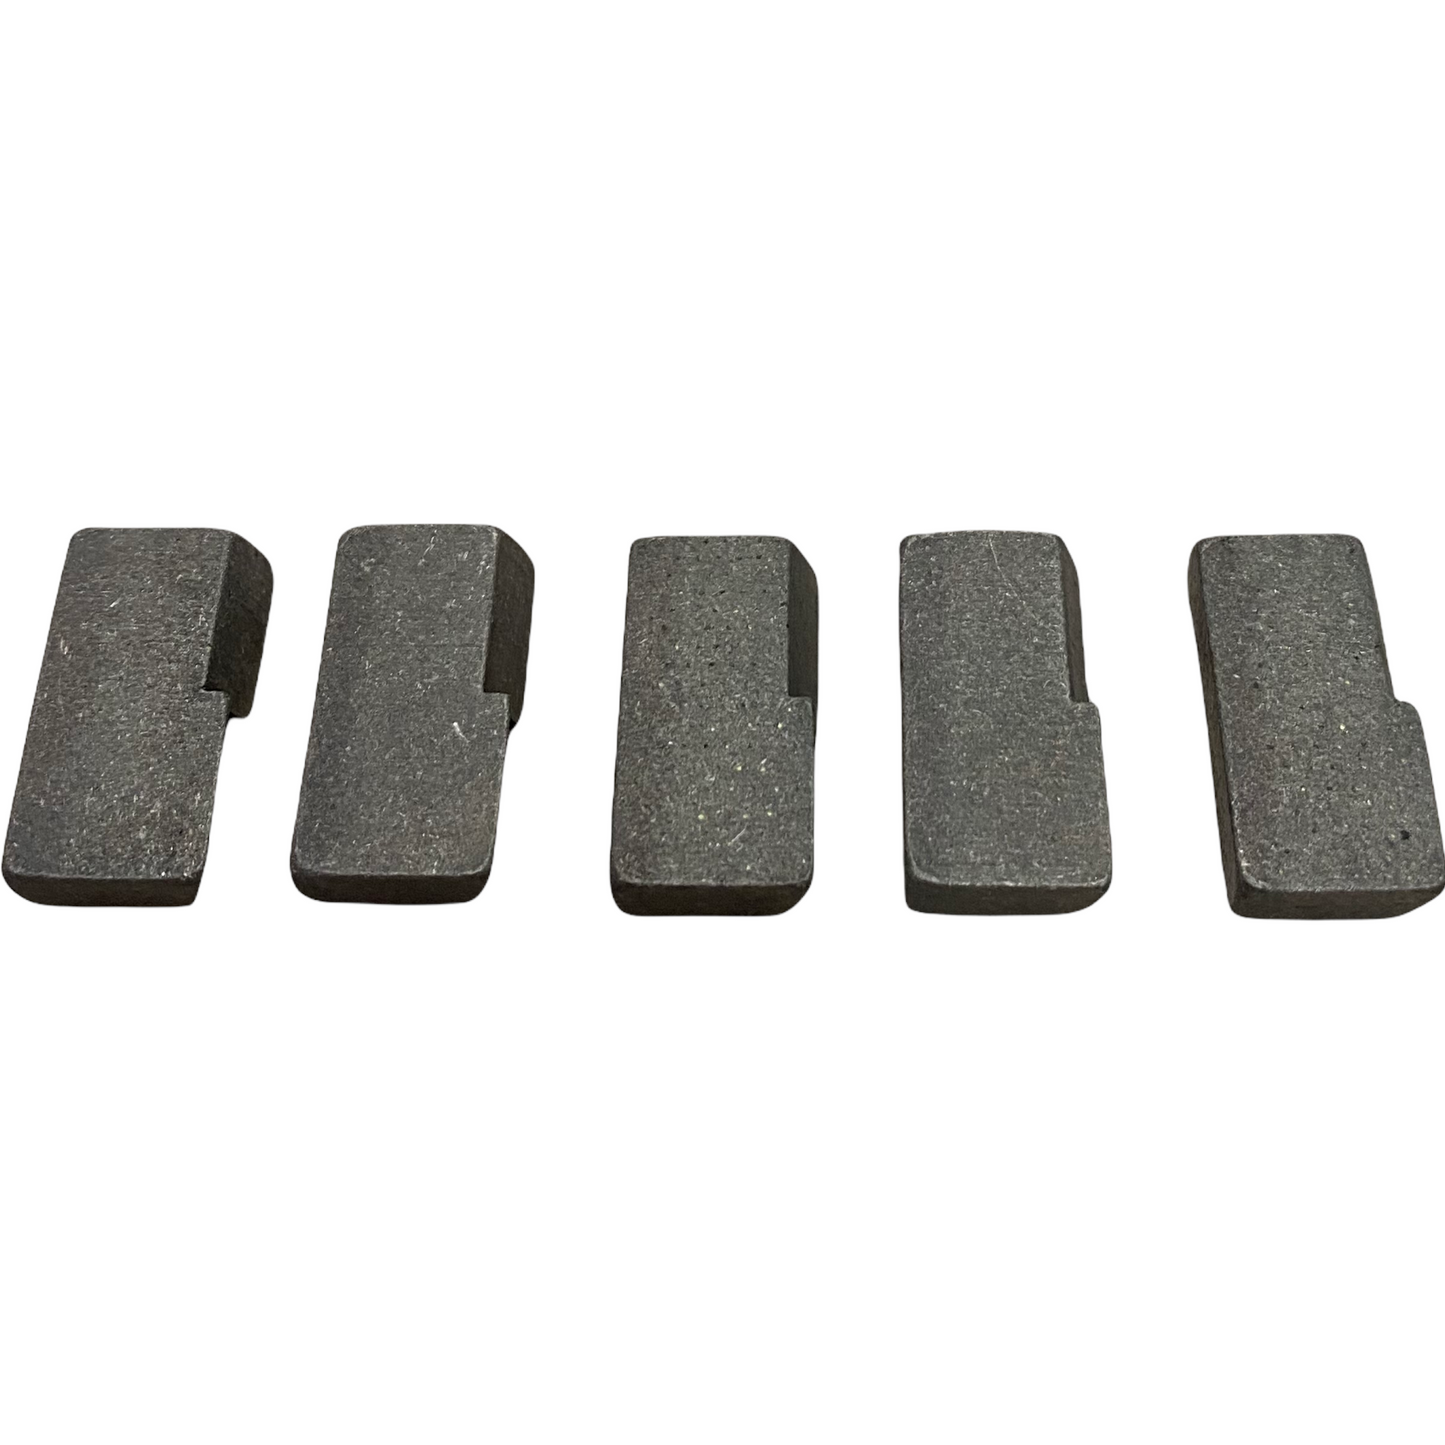 Segments for Diamond Core Drill Bit 1” x .220 x 12mm for Concrete Cutting - 5 Pack